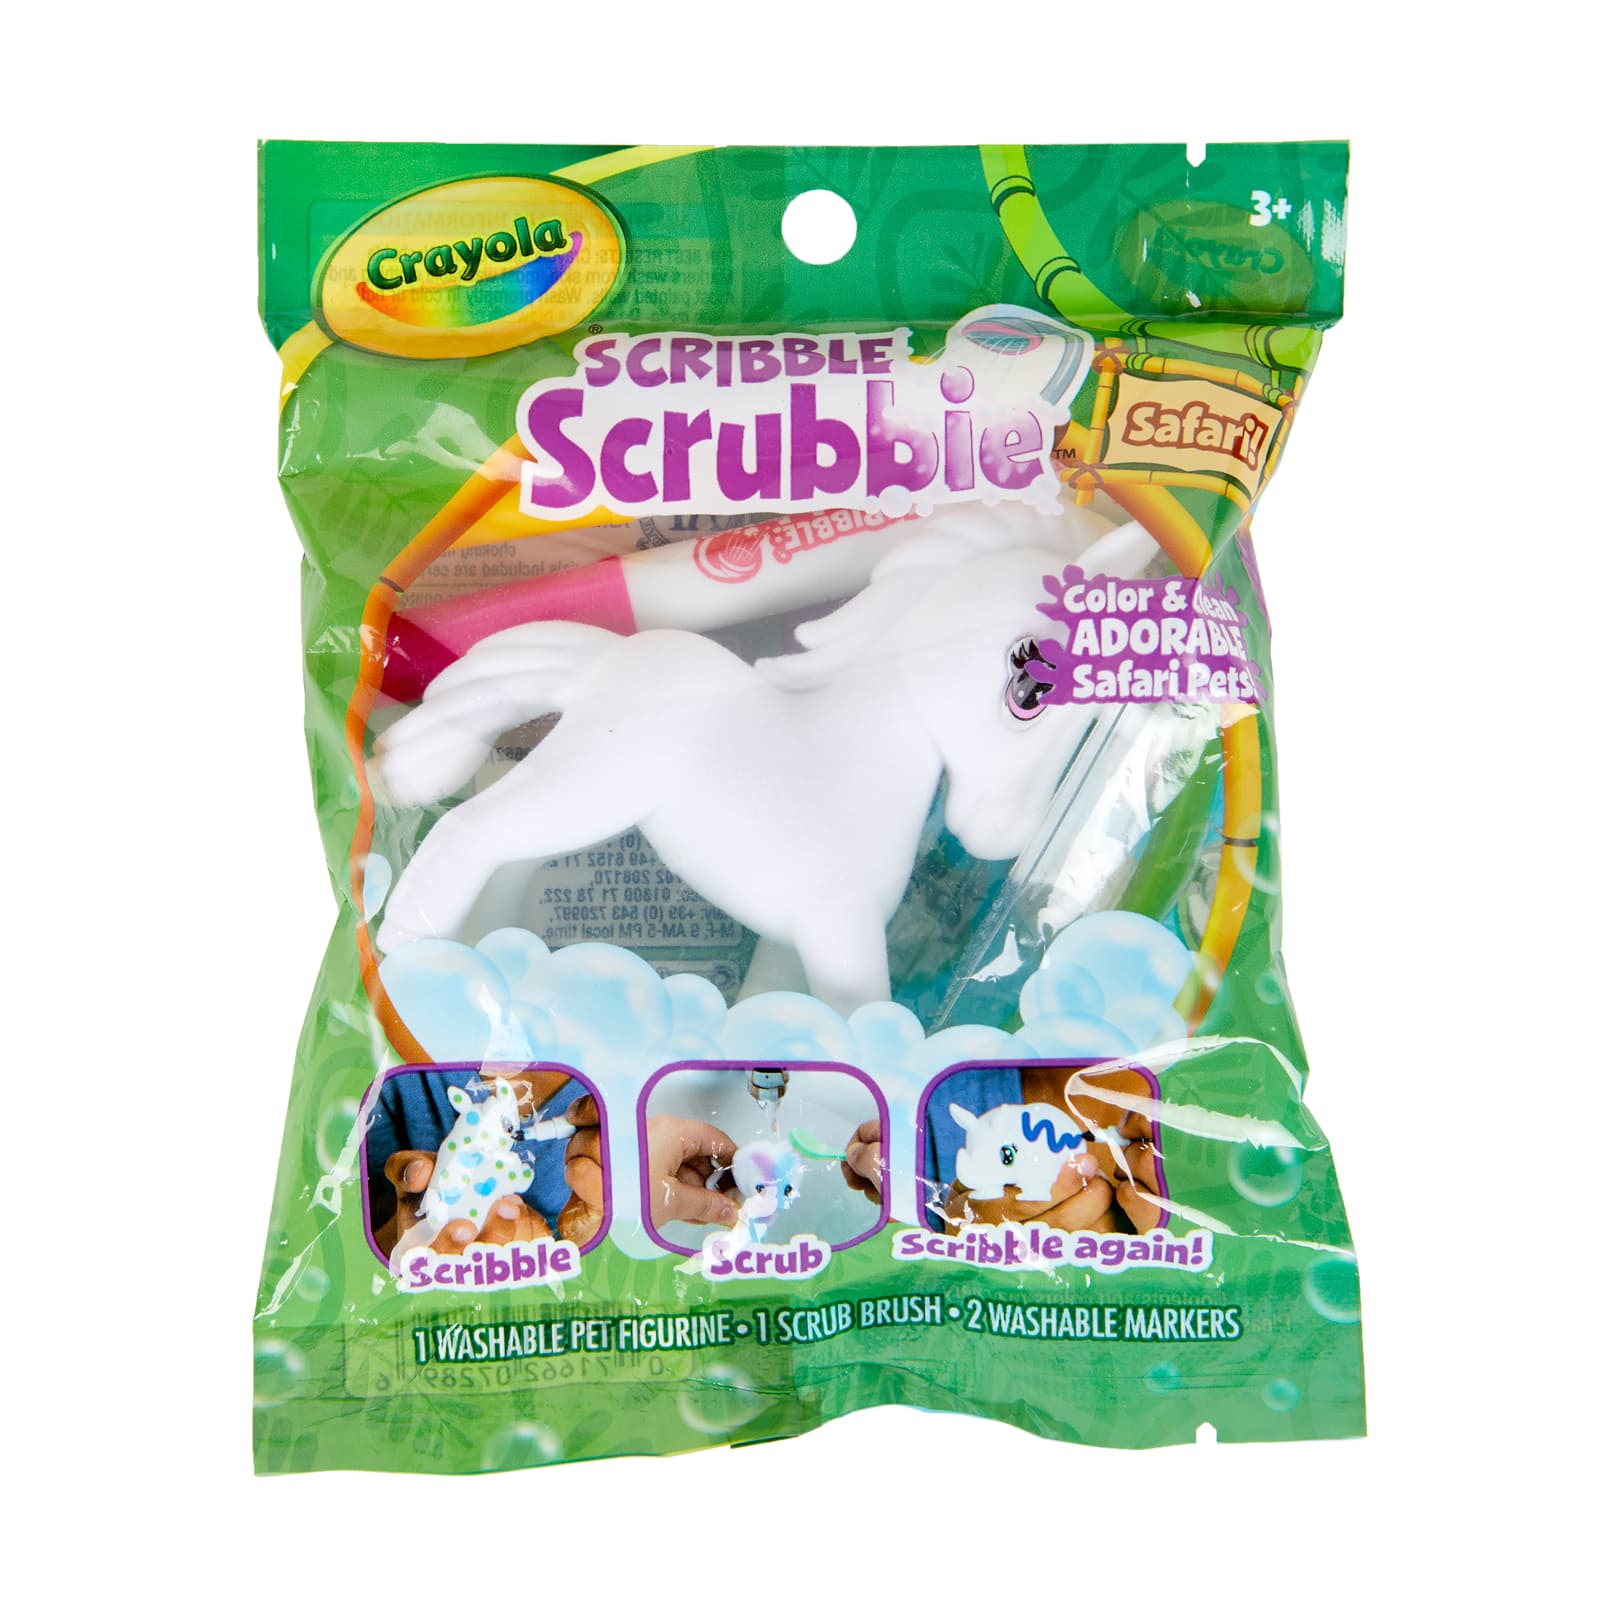 Crayola® Scribble Scrubbie® Pets! Super Salon, Michaels